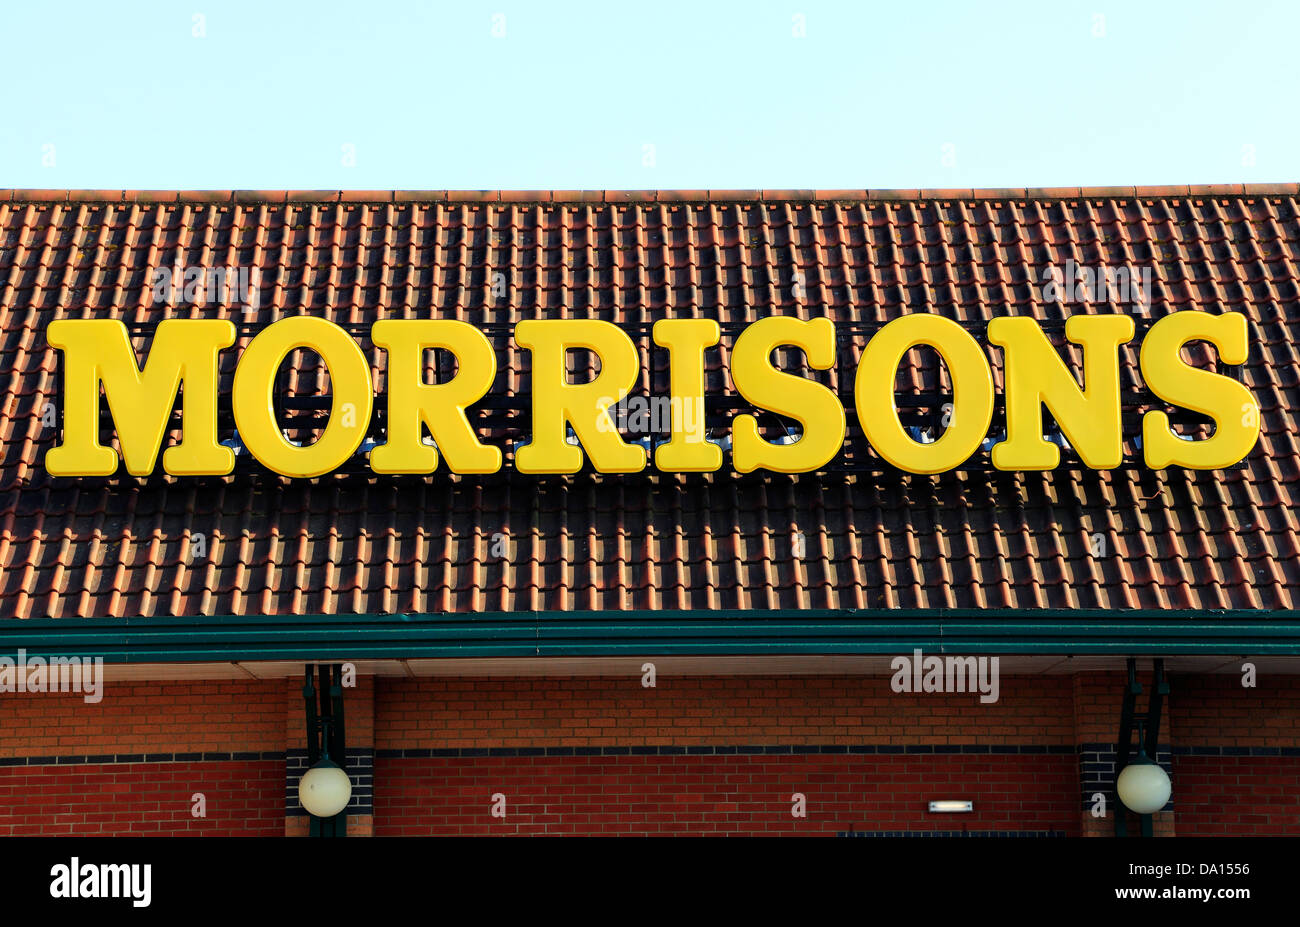 Morrisons supermarket sign, logo, Fakenham, Norfolk England UK supermarkets logos Stock Photo